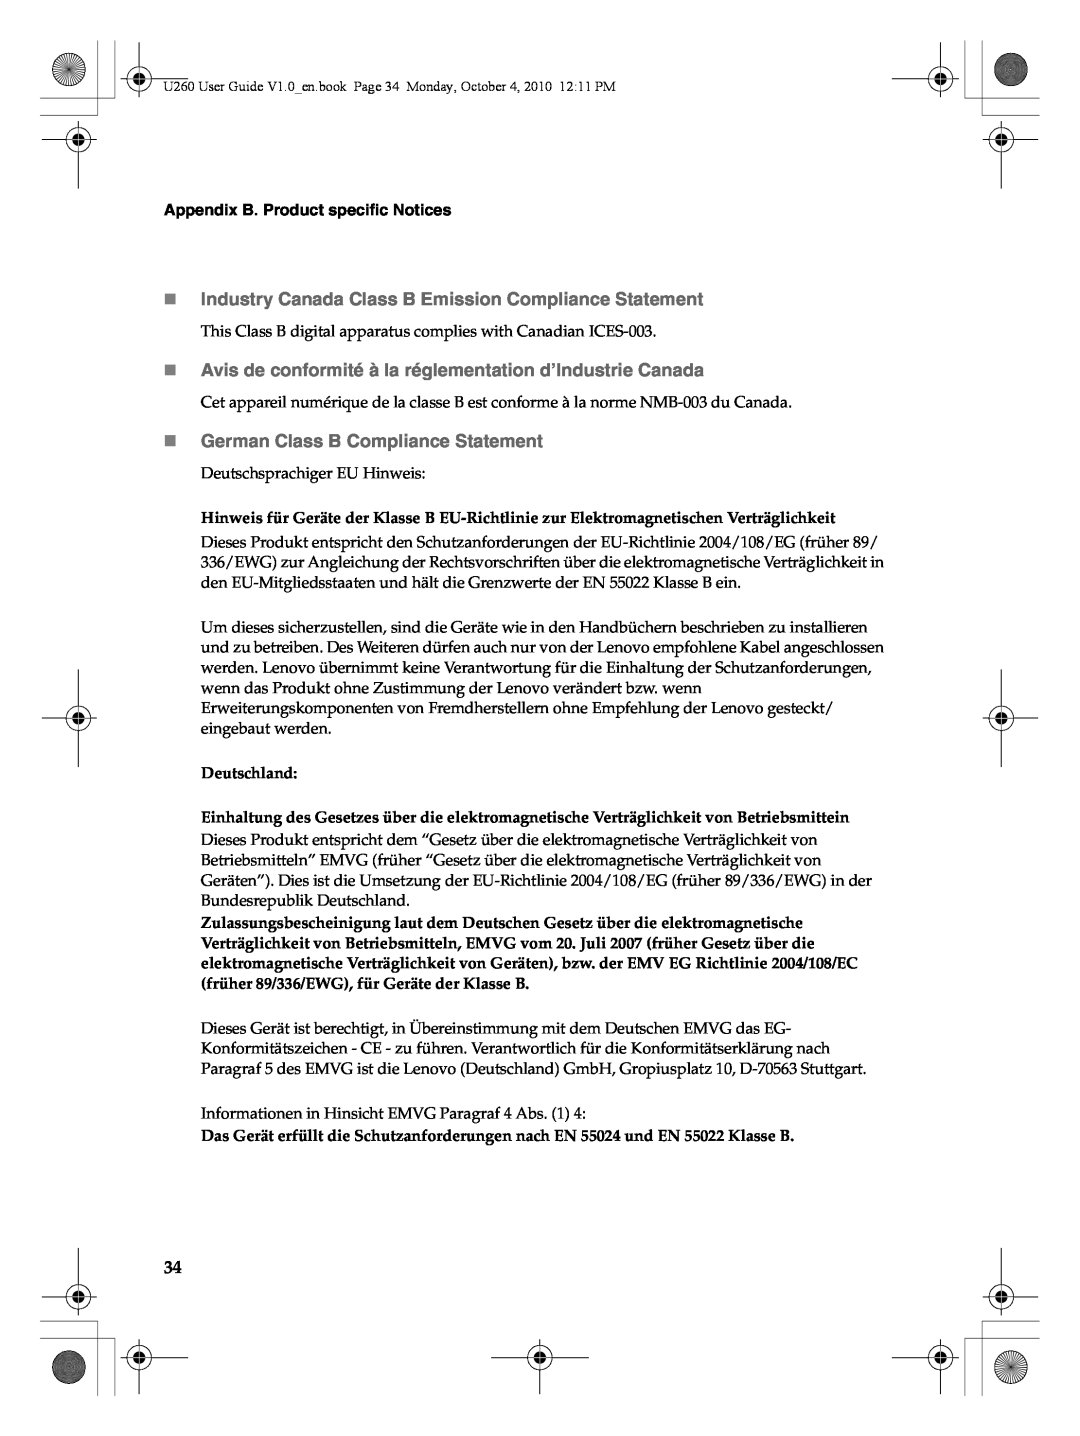 Lenovo U260 manual „German Class B Compliance Statement 